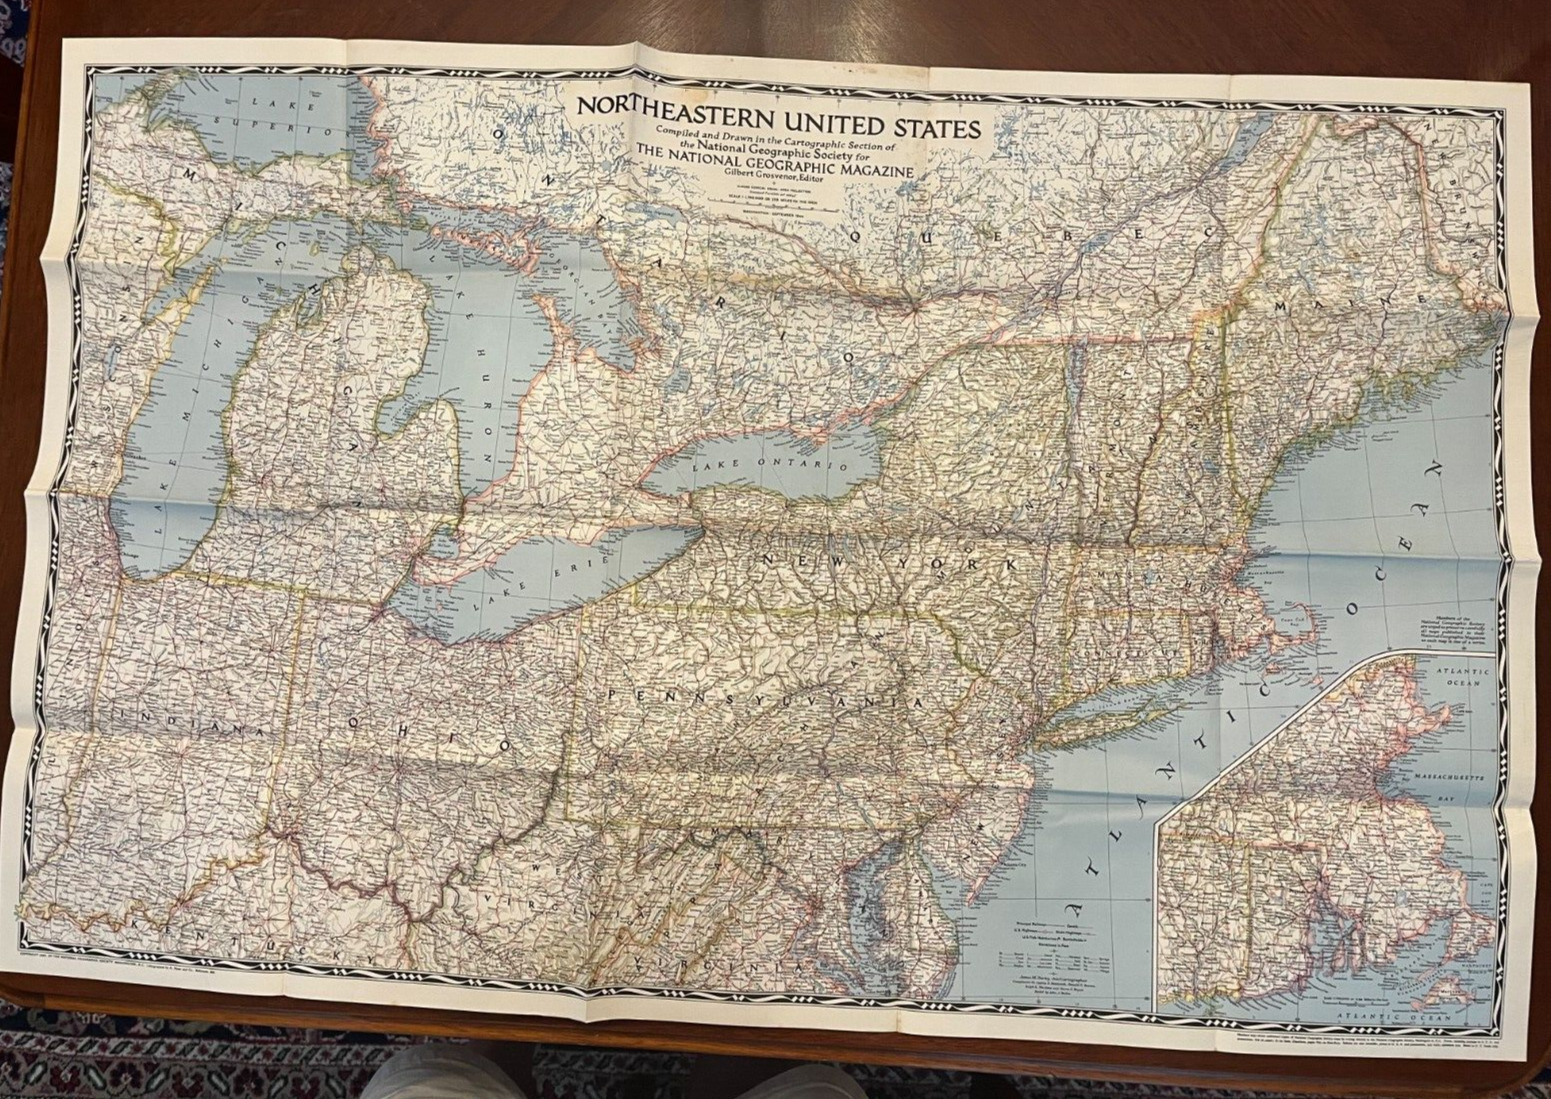 Map of Northeastern United States, 1945 Nat Geo Mag, 26